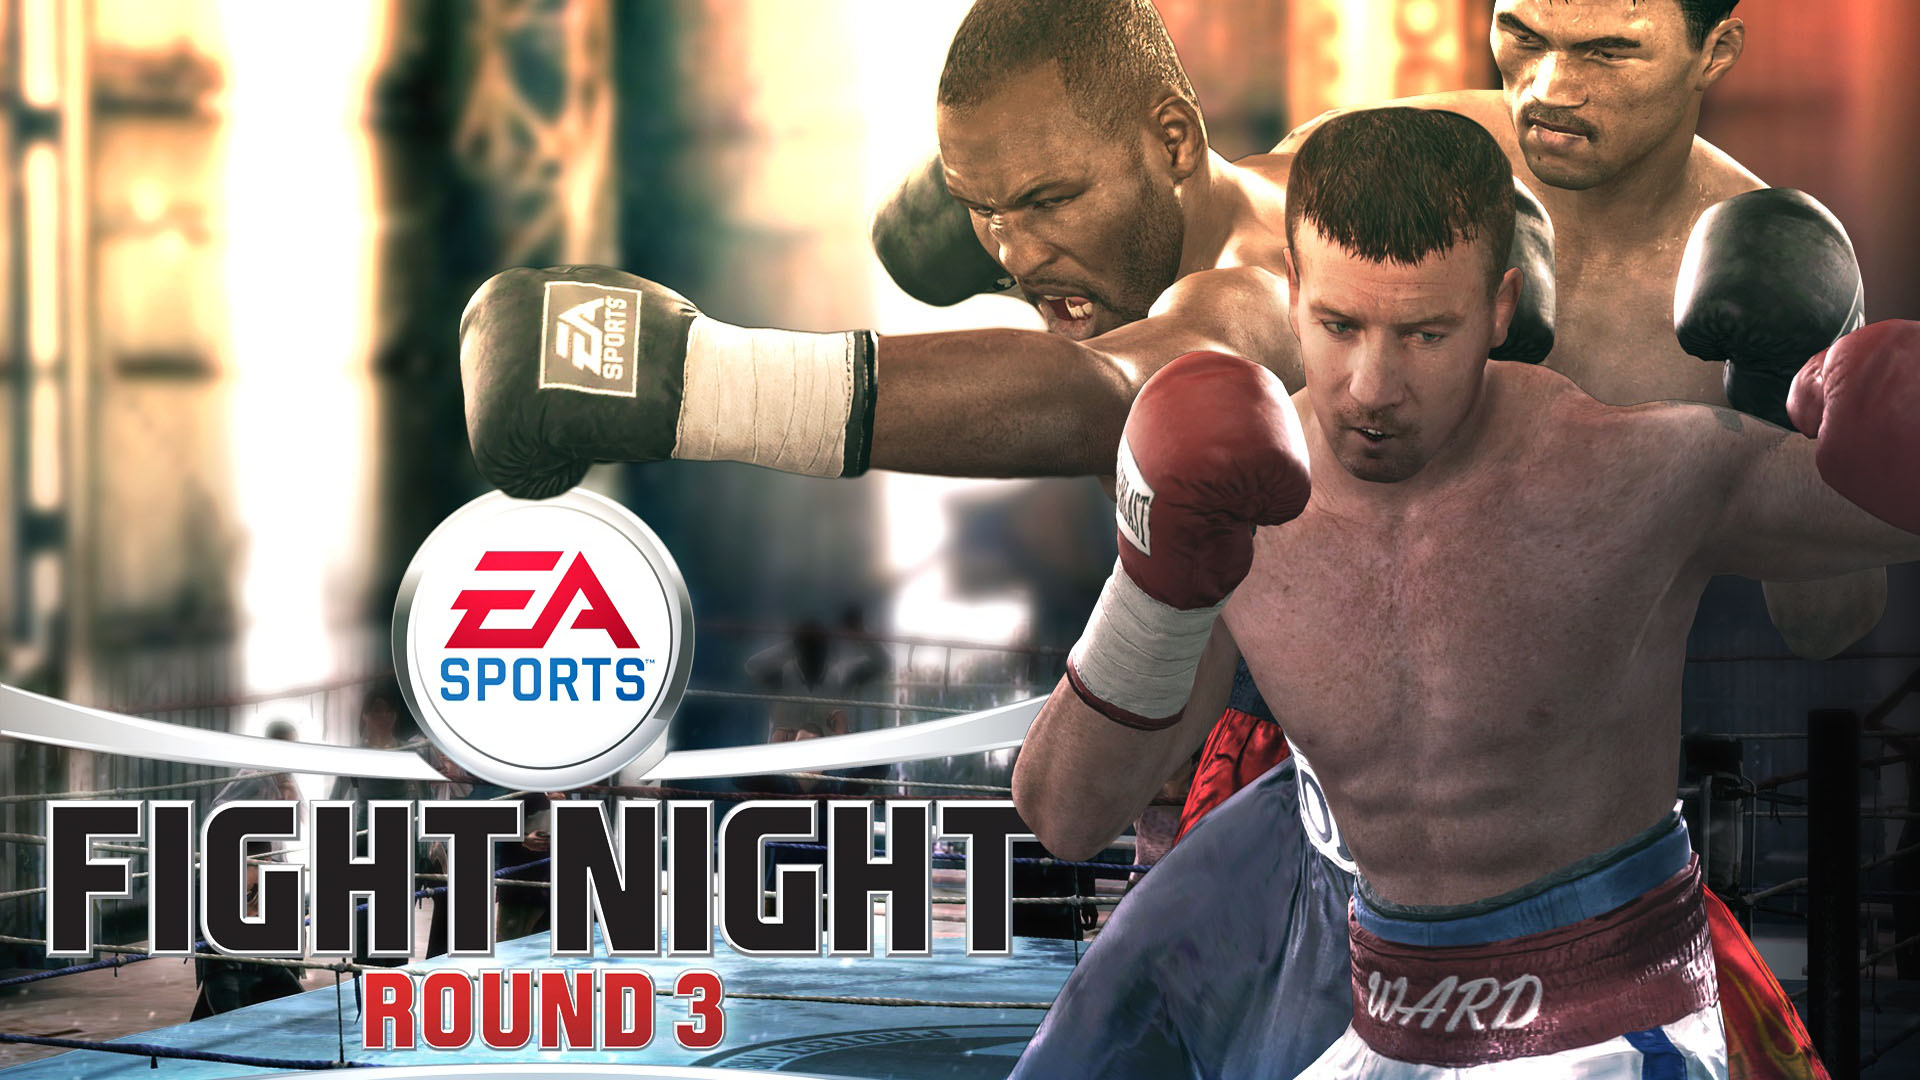 Round 3 live. Fight Night Round 3 (ps3). Fight Night Round 3 ps2. Fight Night Round 2 (ps2). Fight Night Round 3 (PSP).